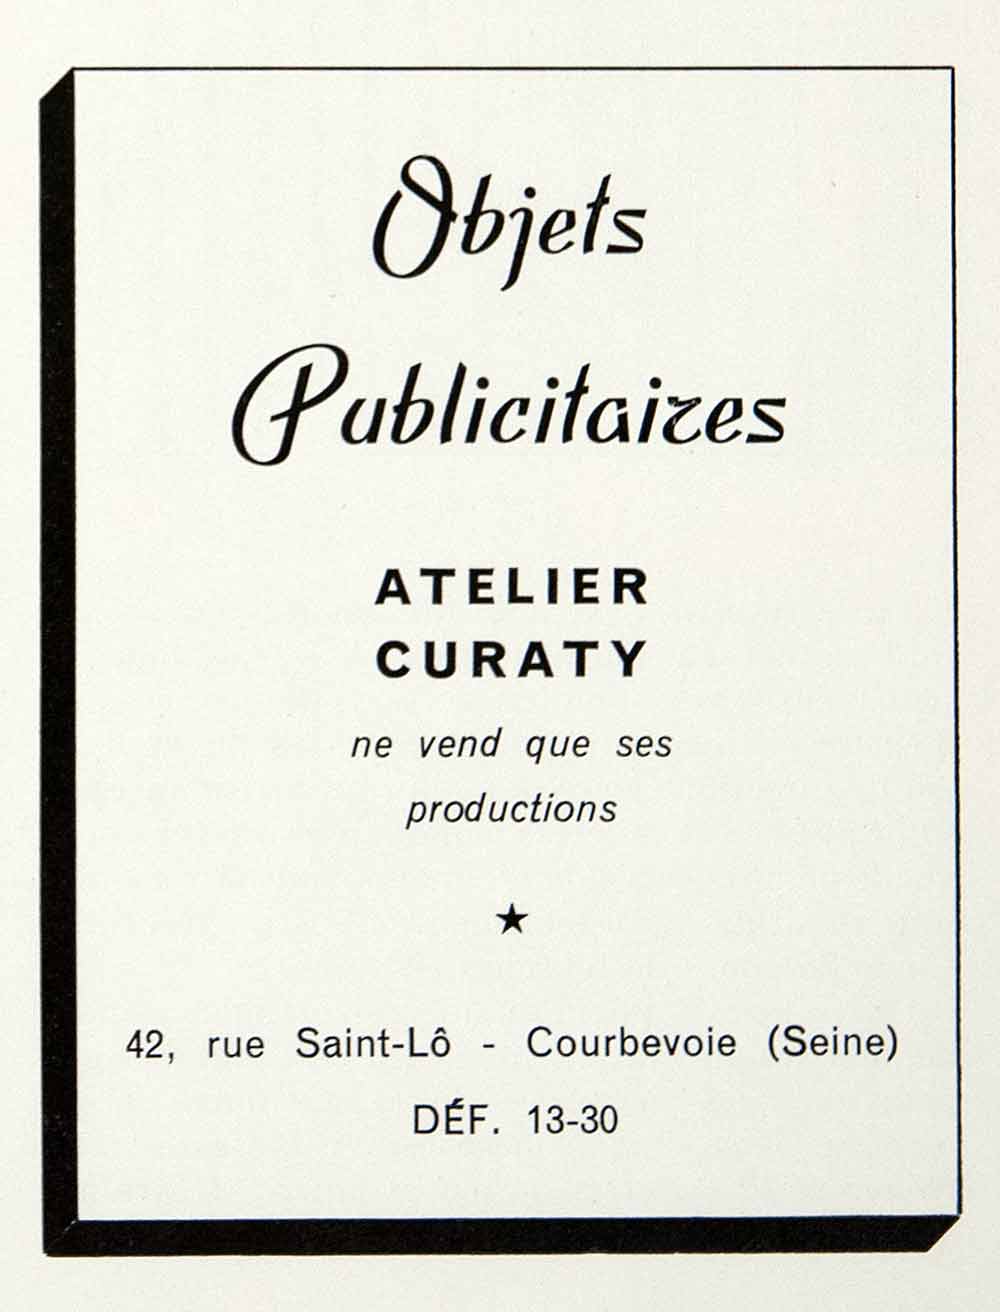 1955 Ad Atelier Curaty Objets Publicitaizes Courbevoie Seine French VEN2